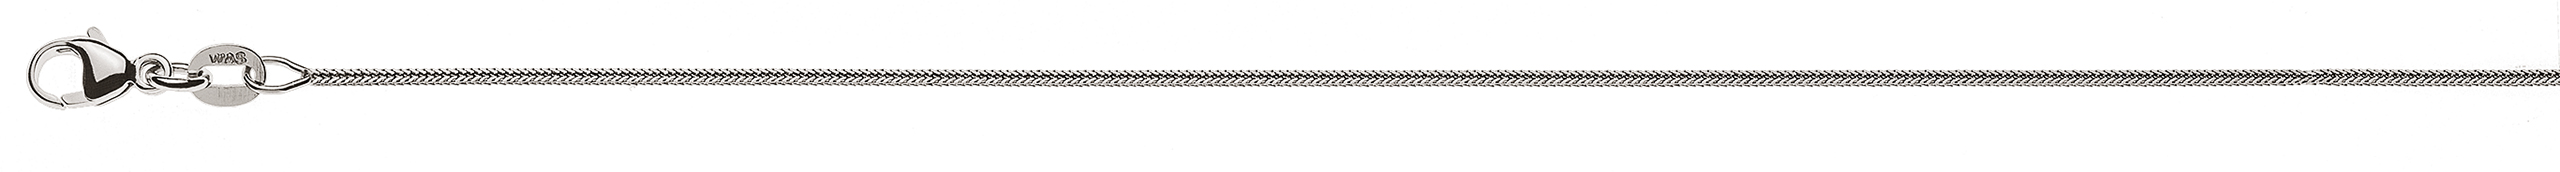 AURONOS Prestige Collier en or blanc 18K queue de renard diamantée 45cm 0.9mm